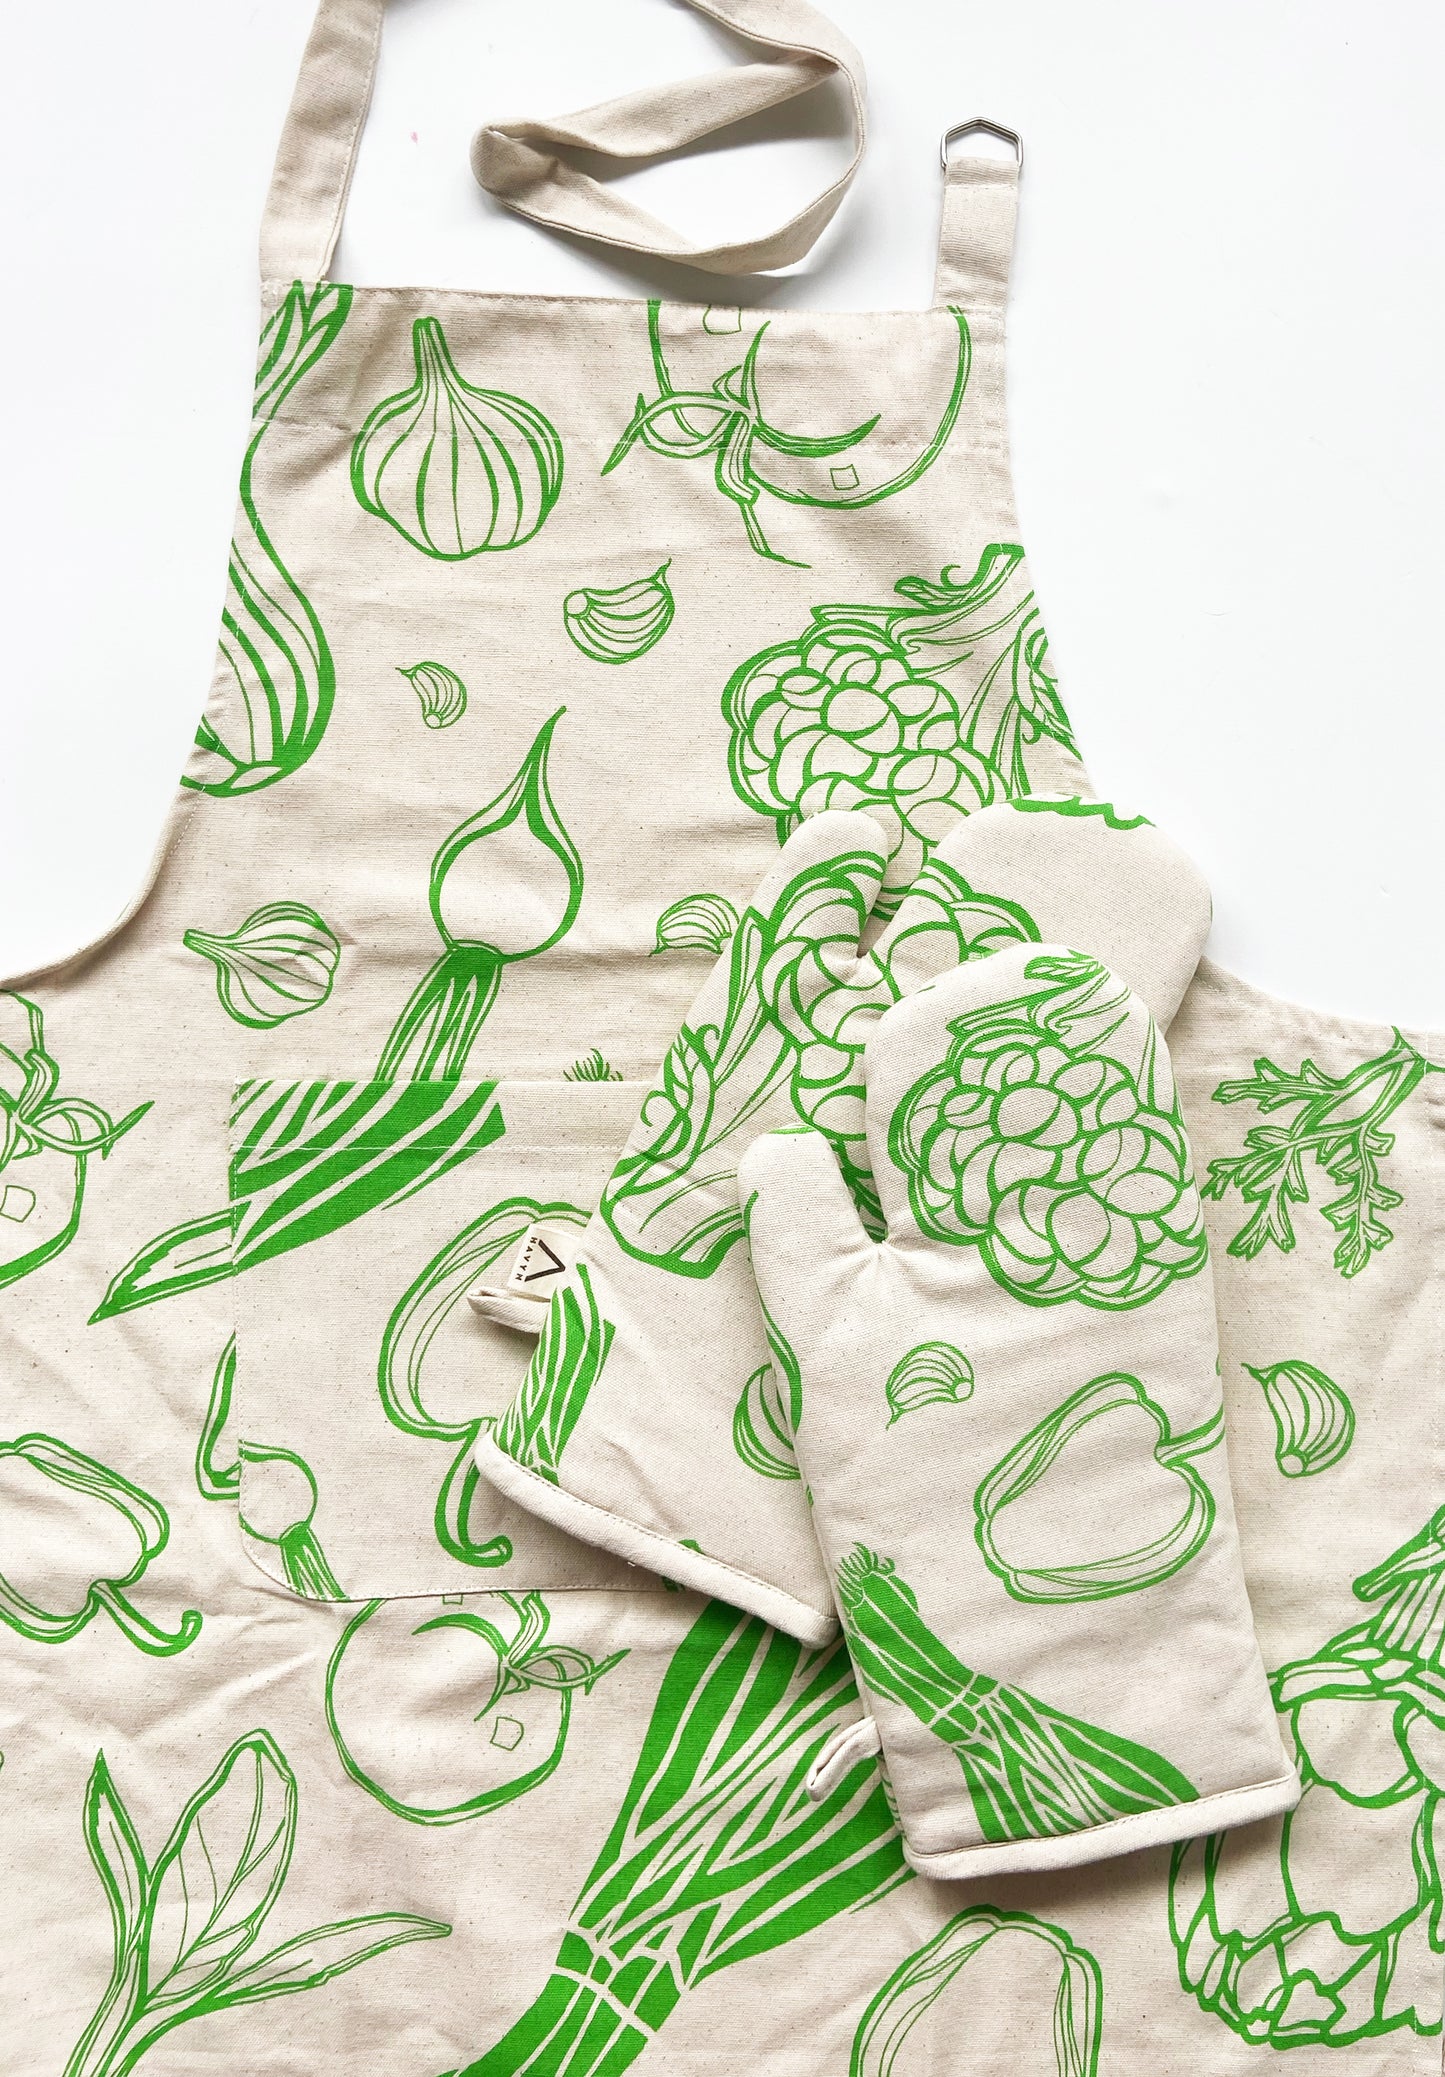 Unisex Apron and Oven Mitt Set - Large Veggies Pattern - Natural Cotton Canvas